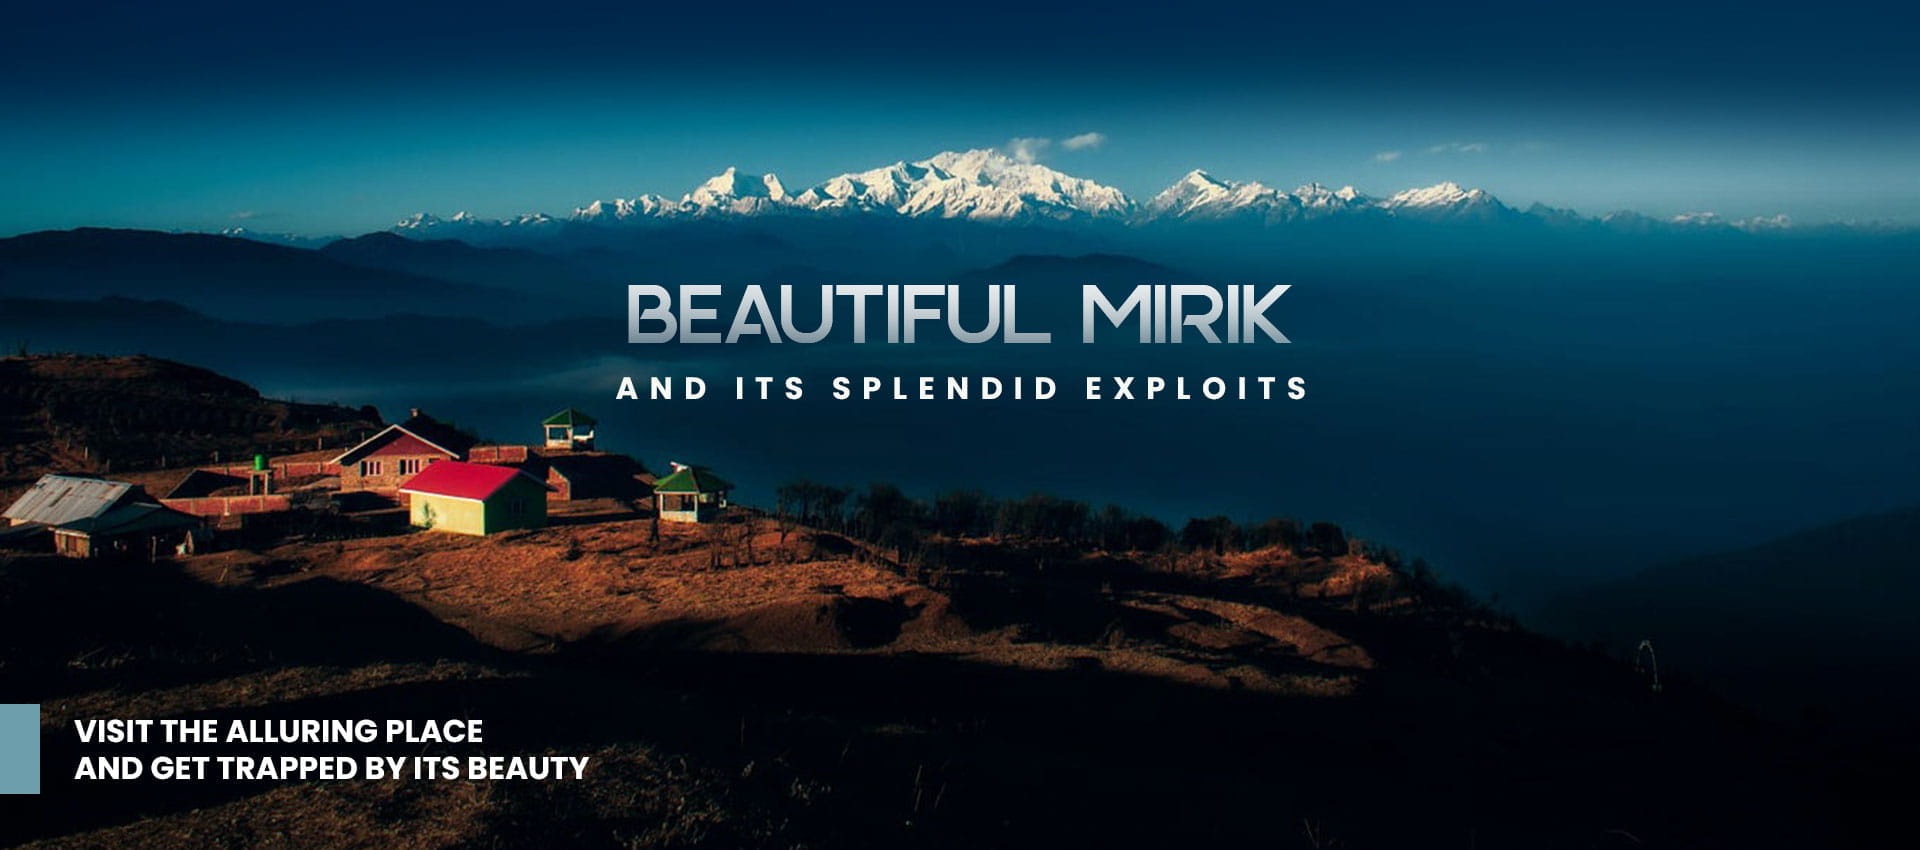 Beautiful Mirik and its splendid exploits